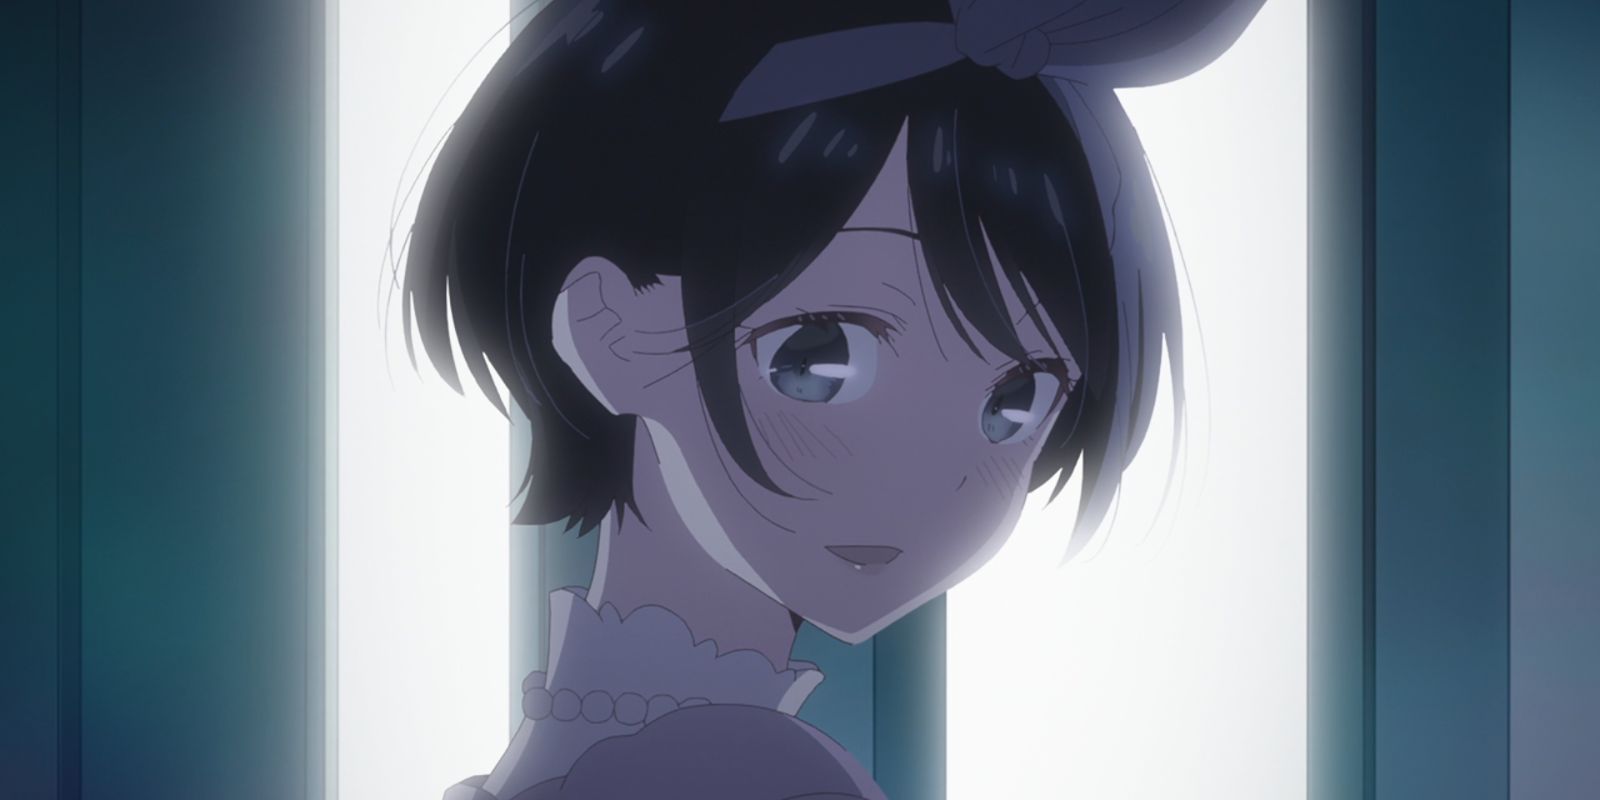 Rent a Girlfriend Season 2 Episode 1 Preview Released - Anime Corner